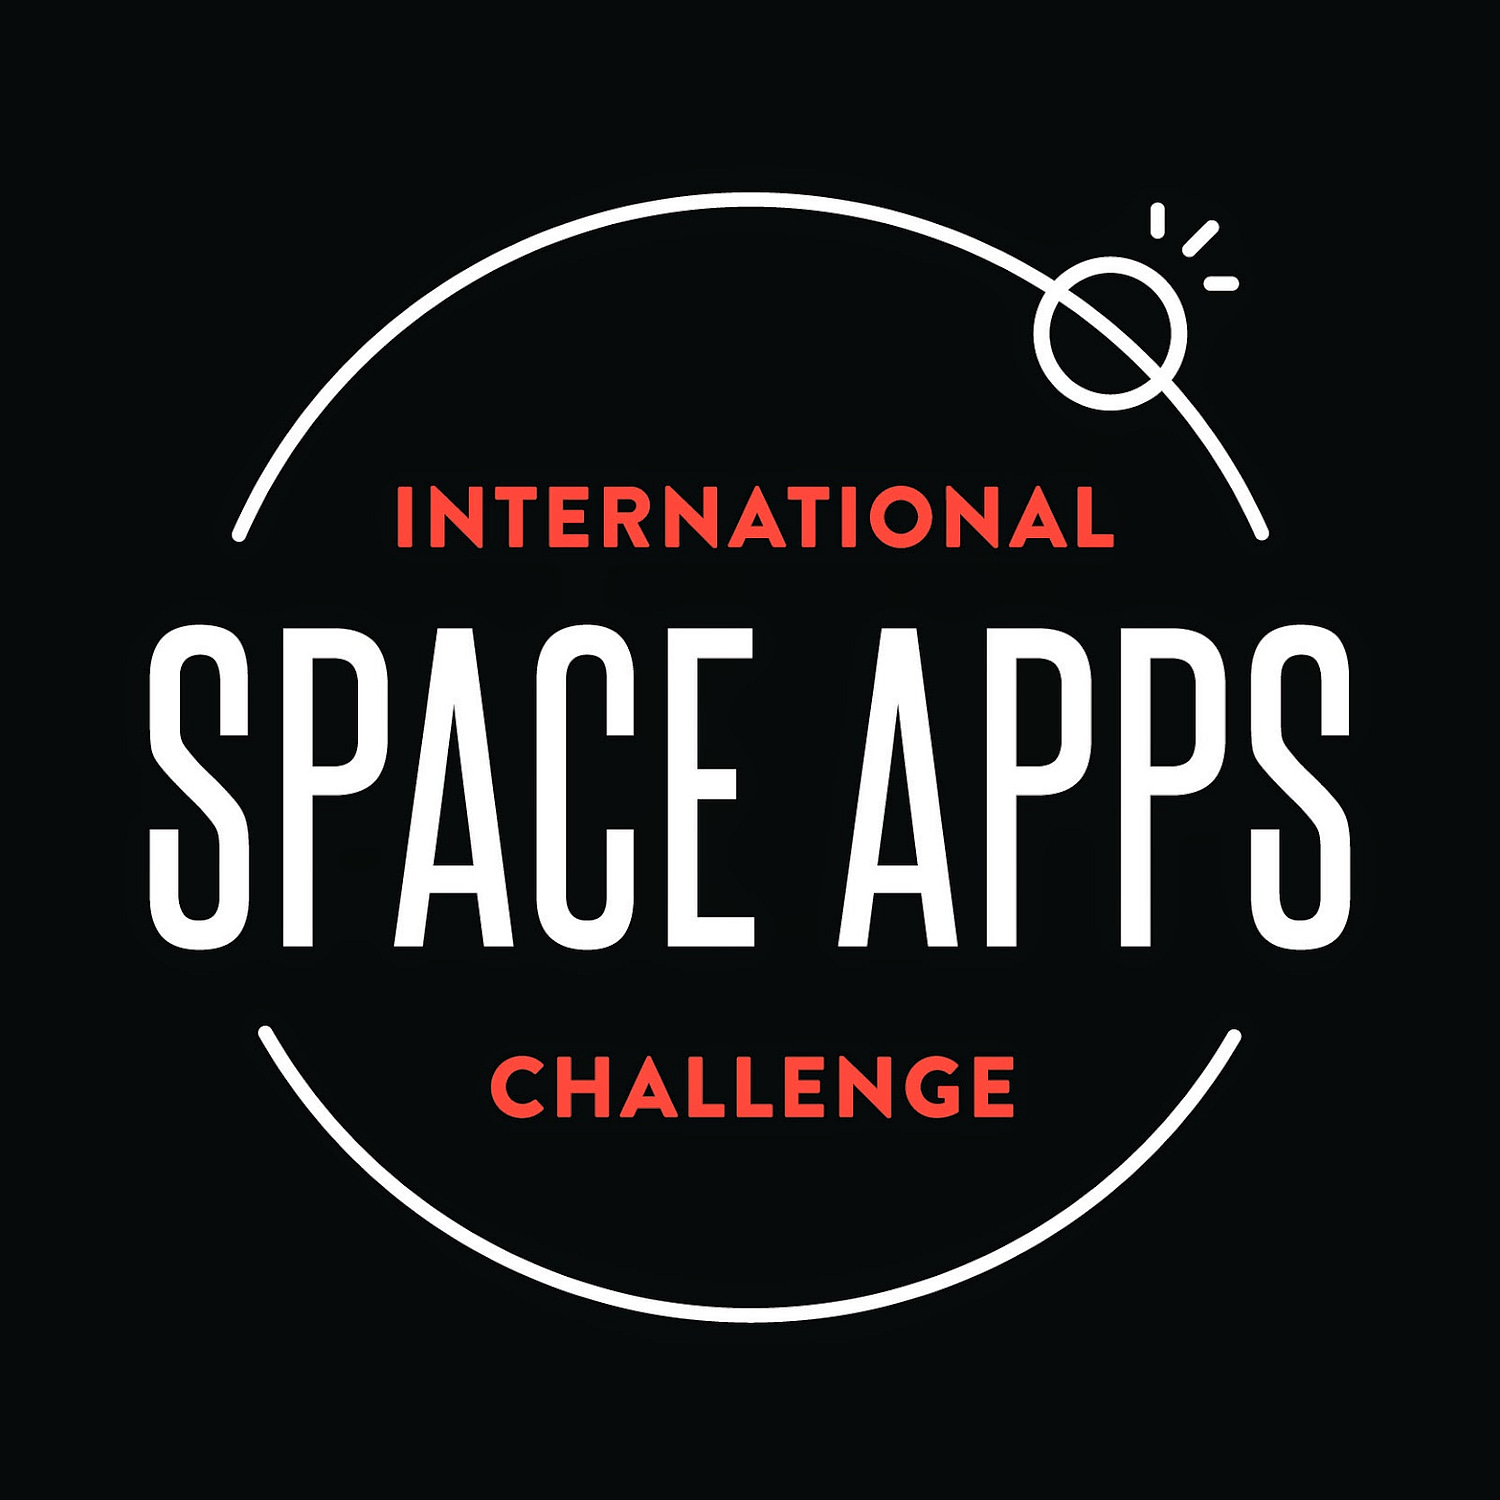 NASA Space Apps Challenge logo